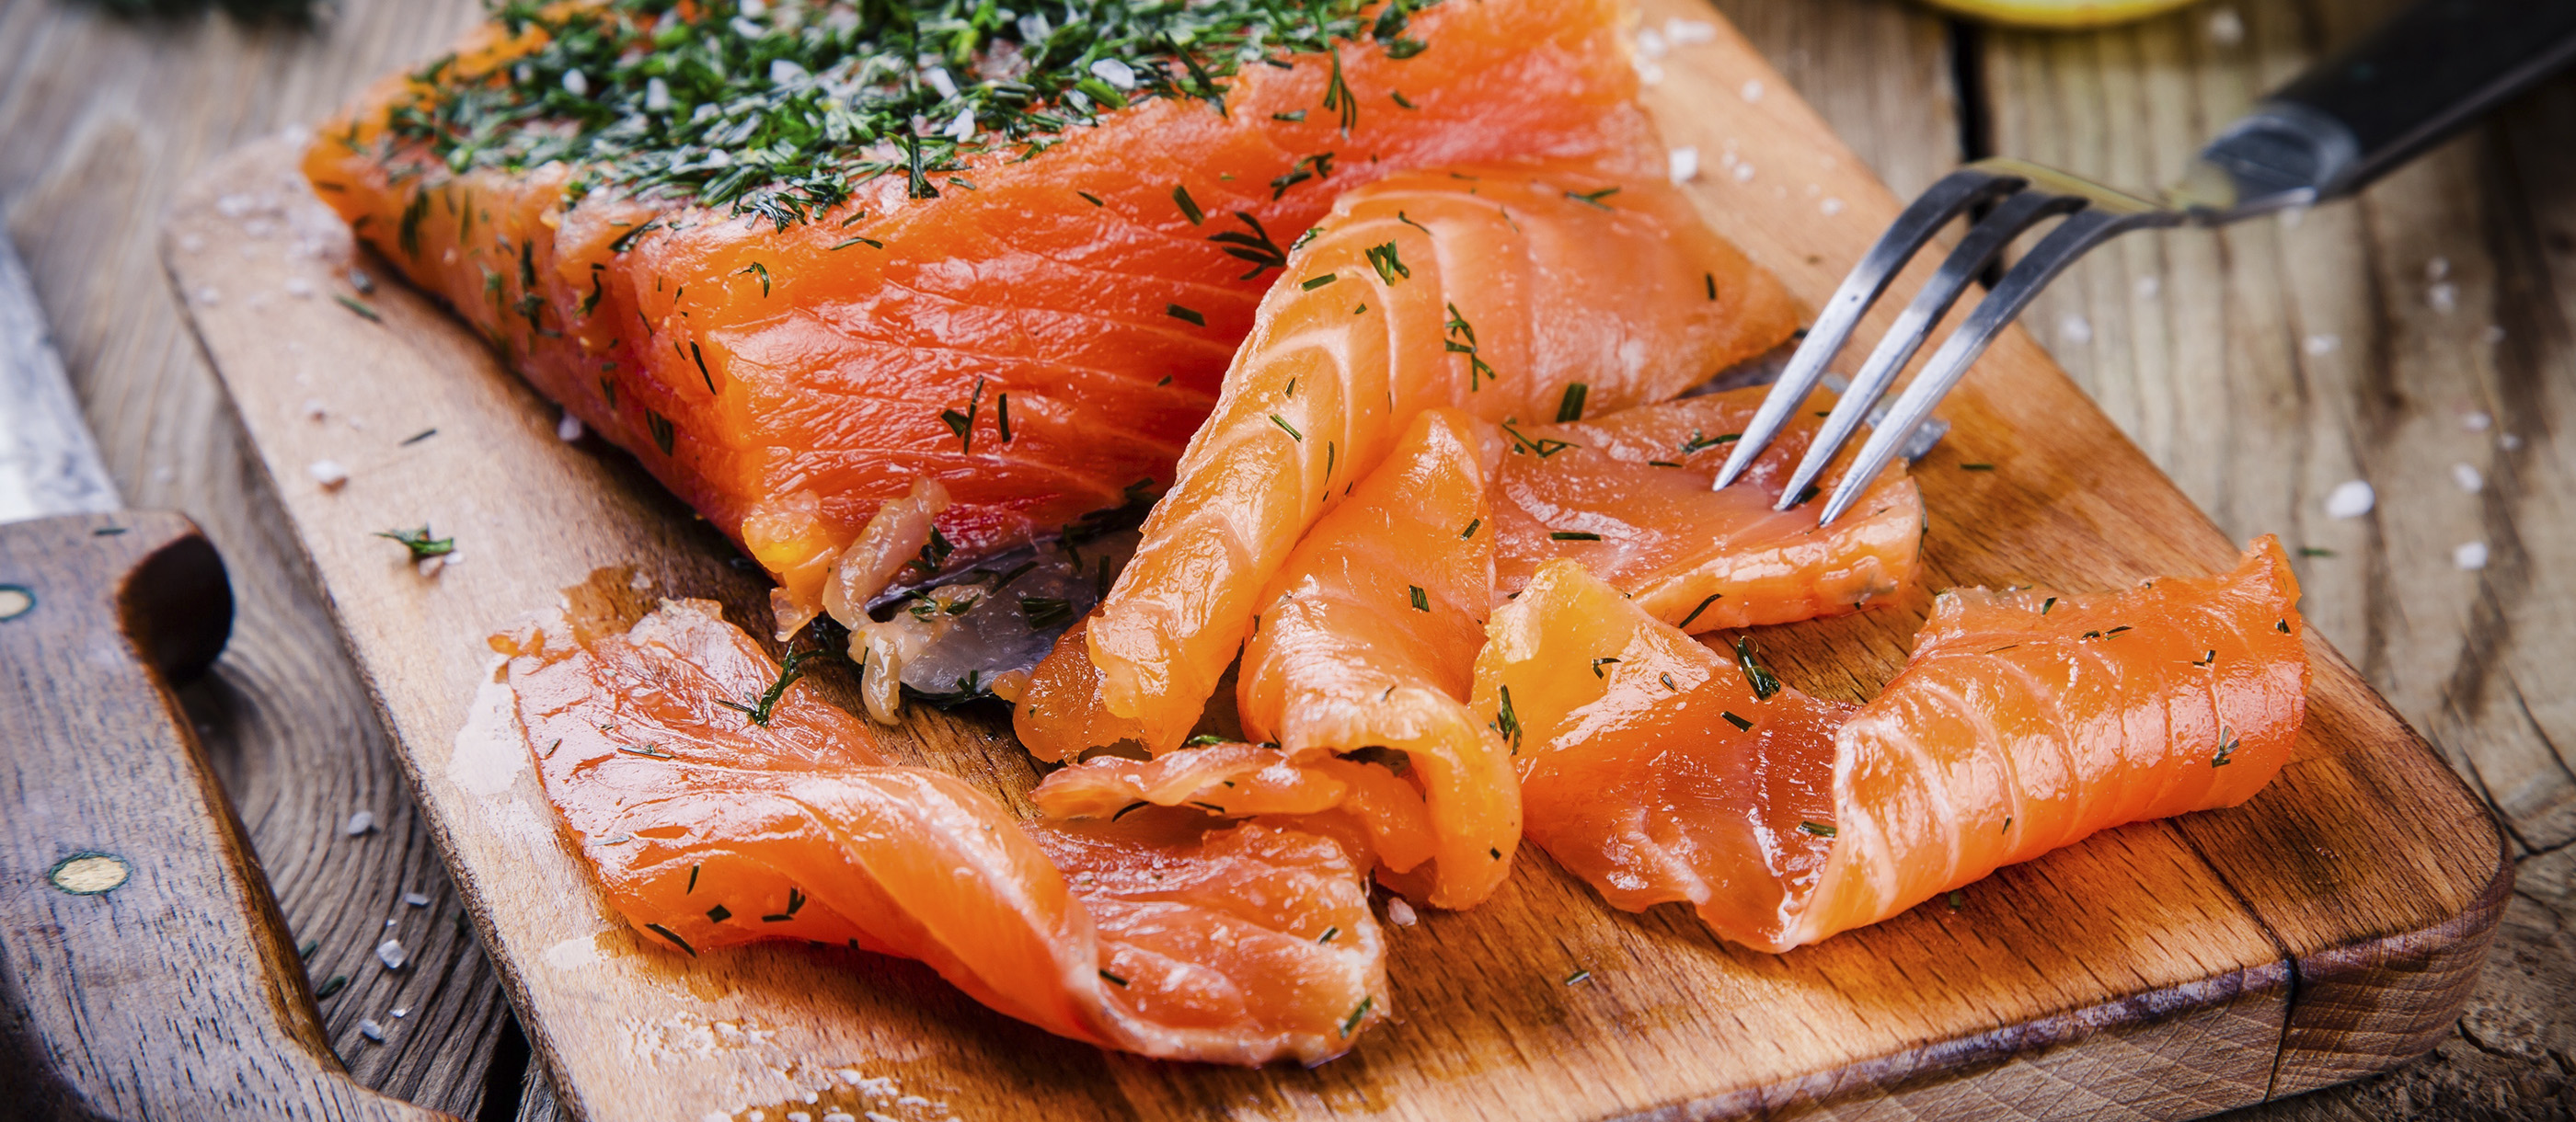 10 Most Popular Northern European Fish Dishes - TasteAtlas